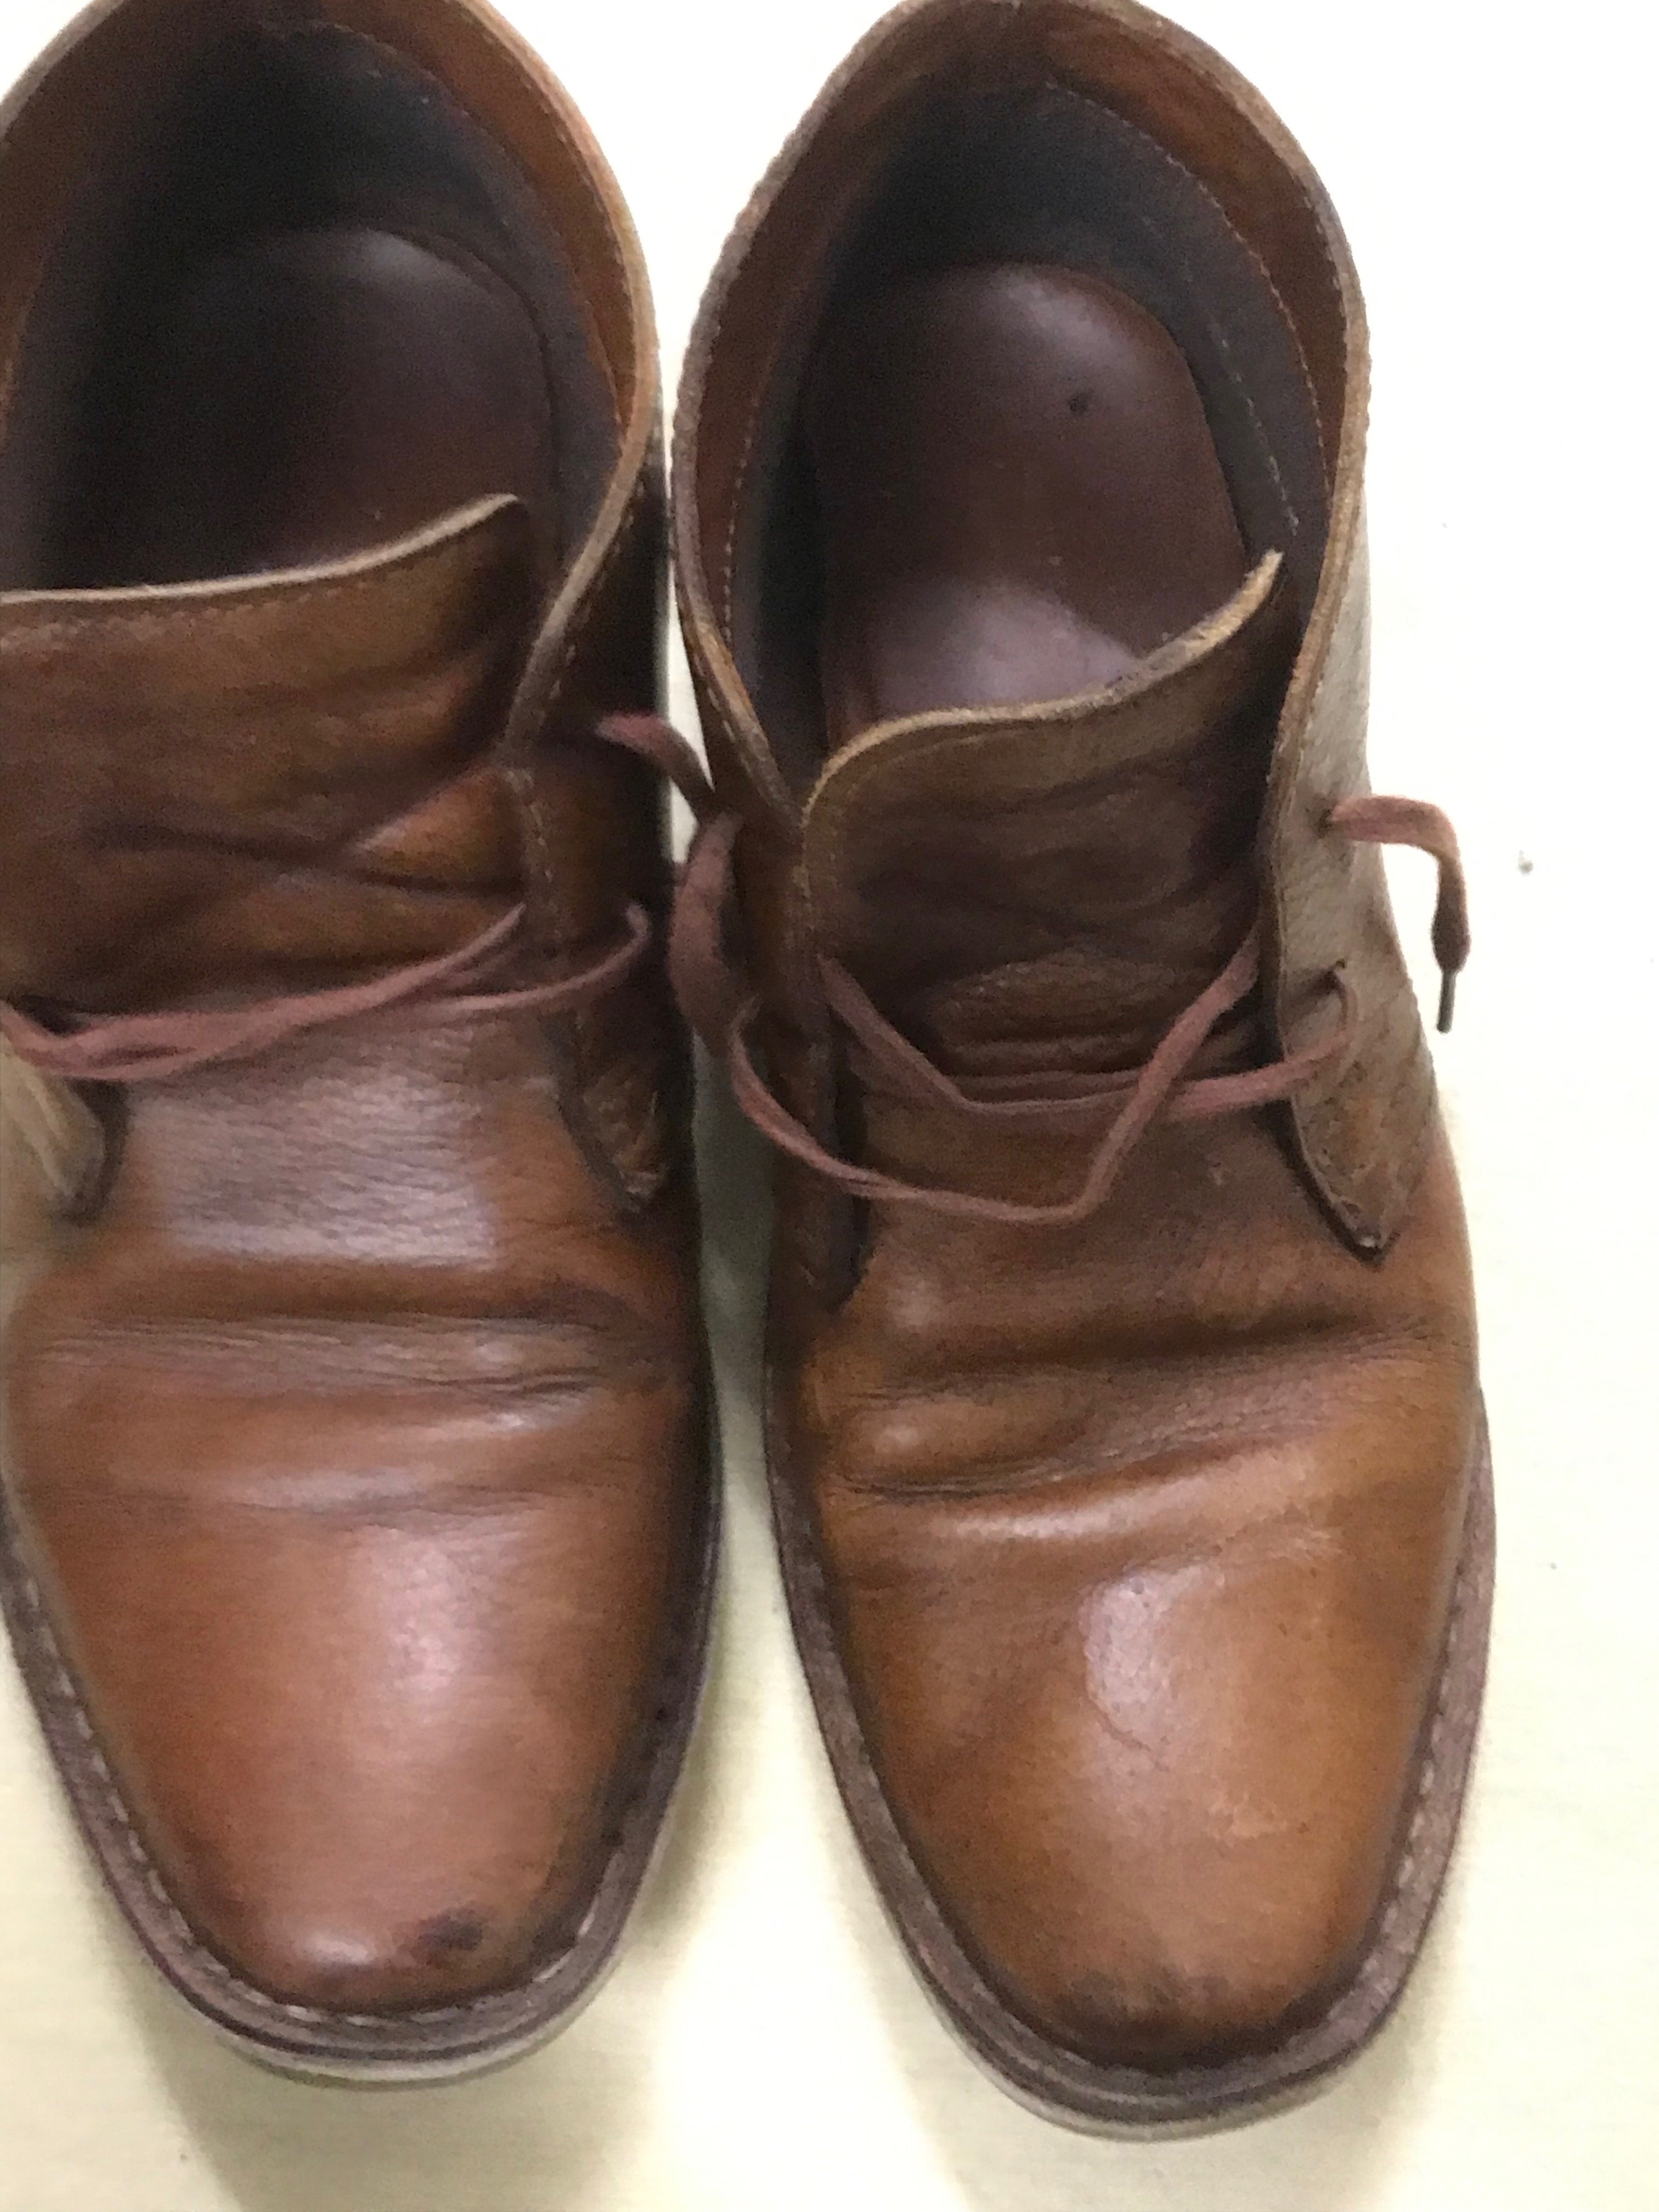 Vintage Lederstiefel halbhoch Boots Gr.41